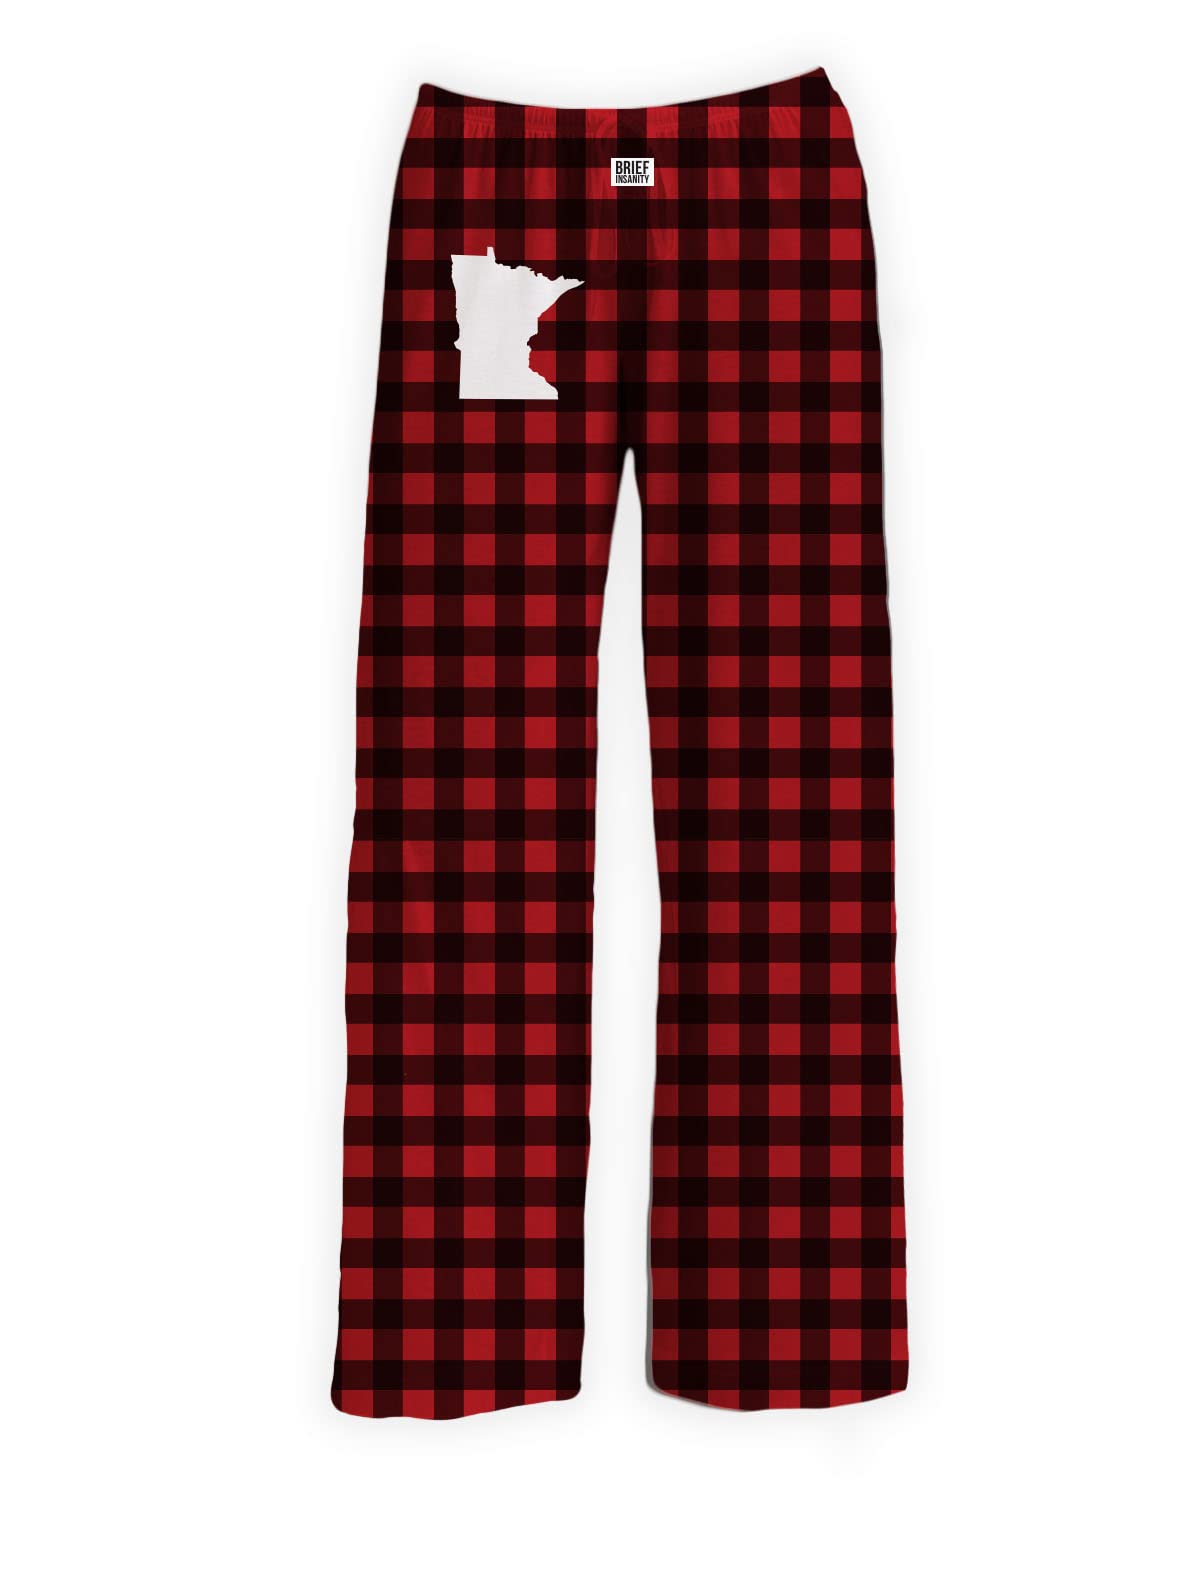 BRIEF INSANITY Minnesota Plaid Pajama Pants